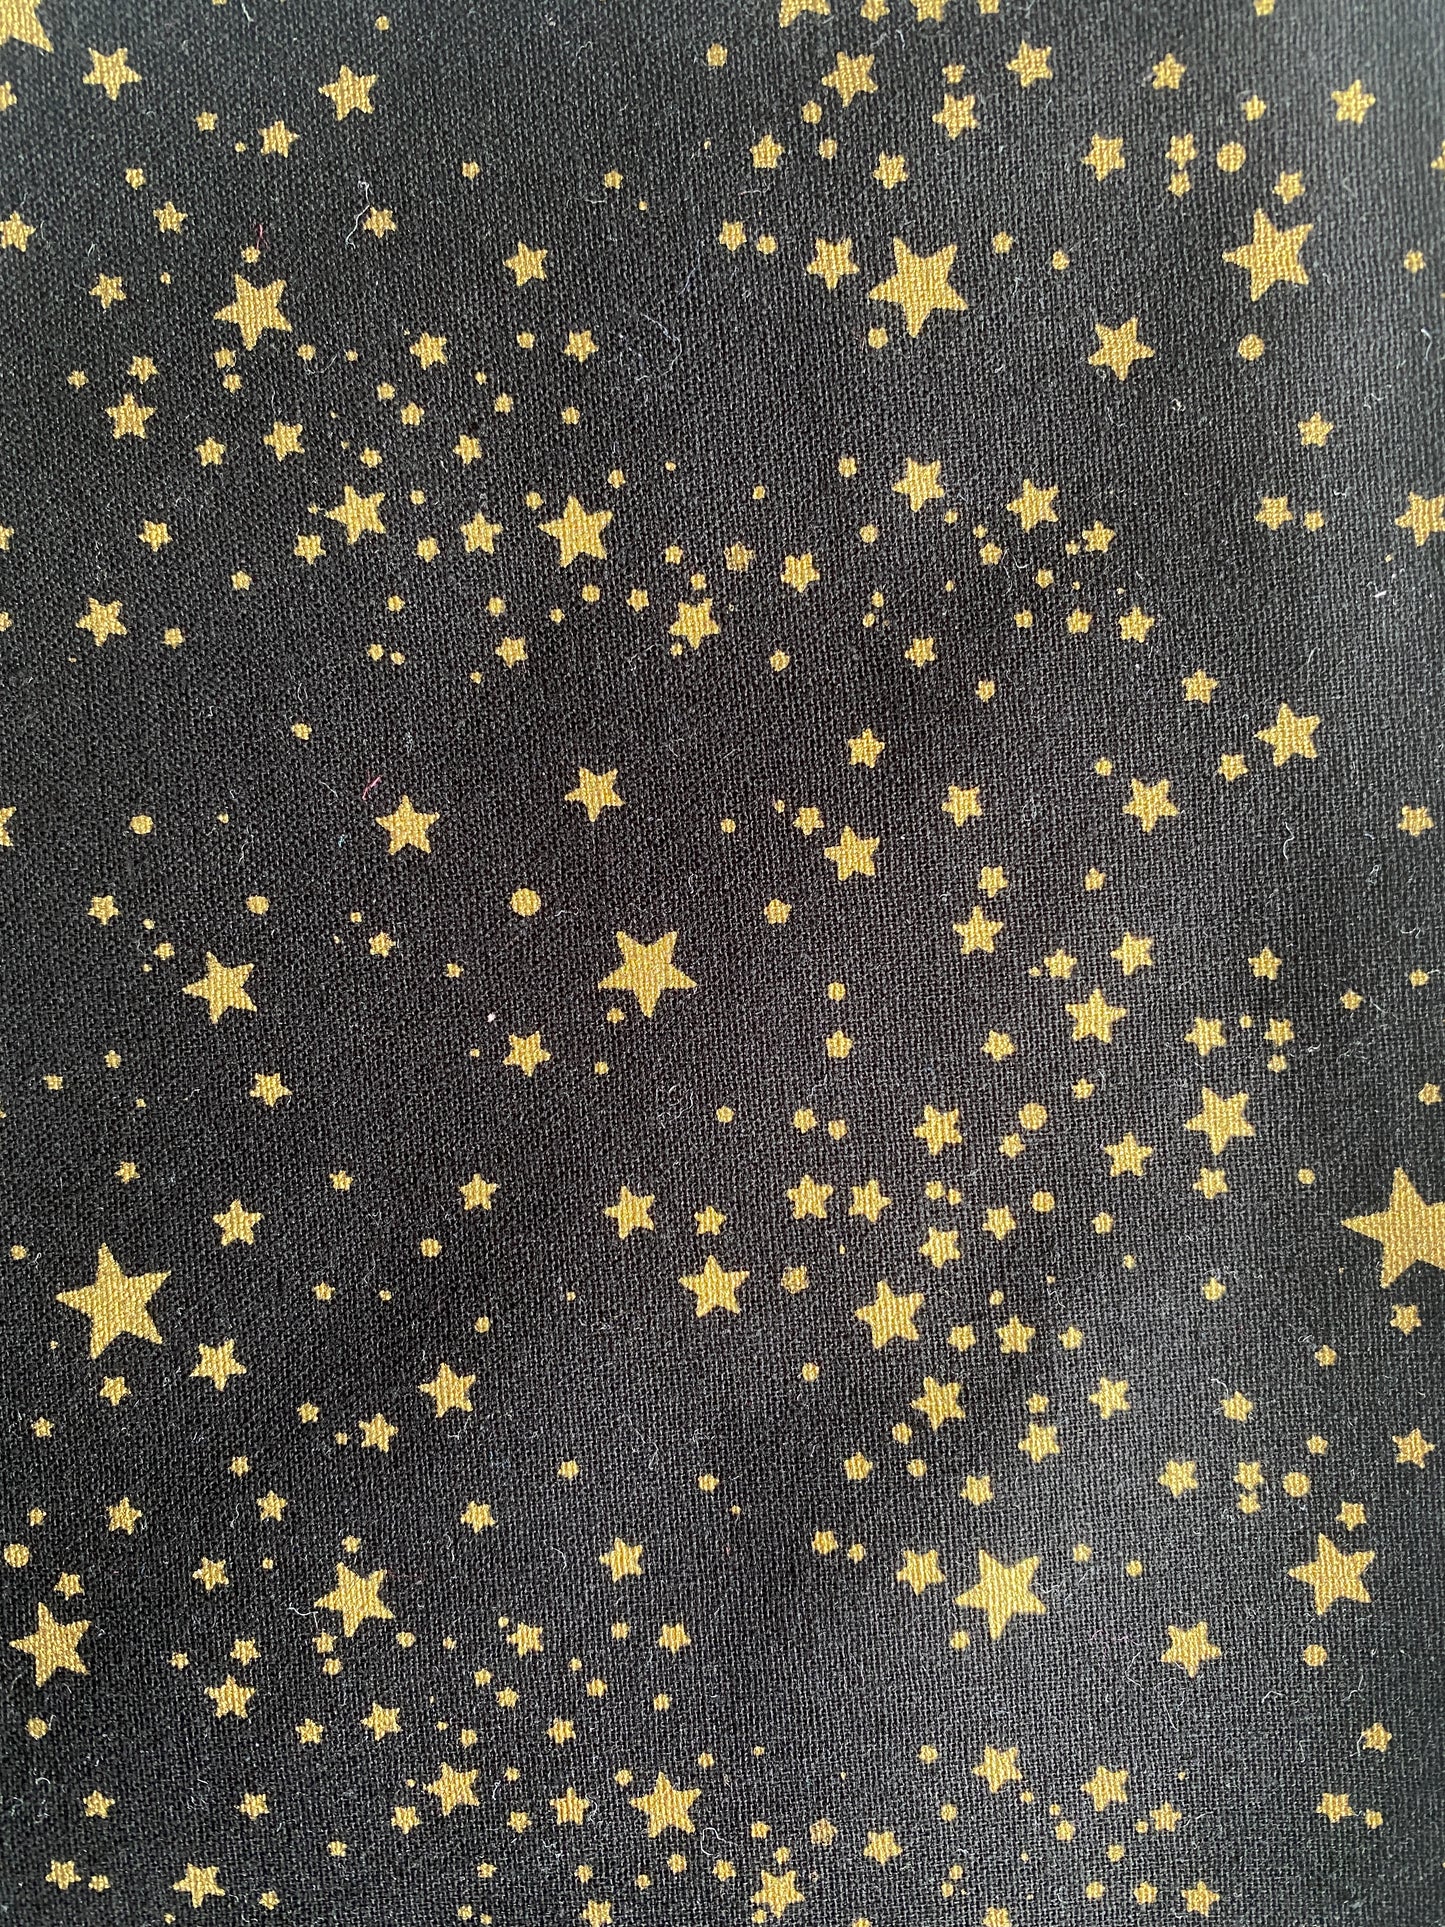 #11 Stars Cloth